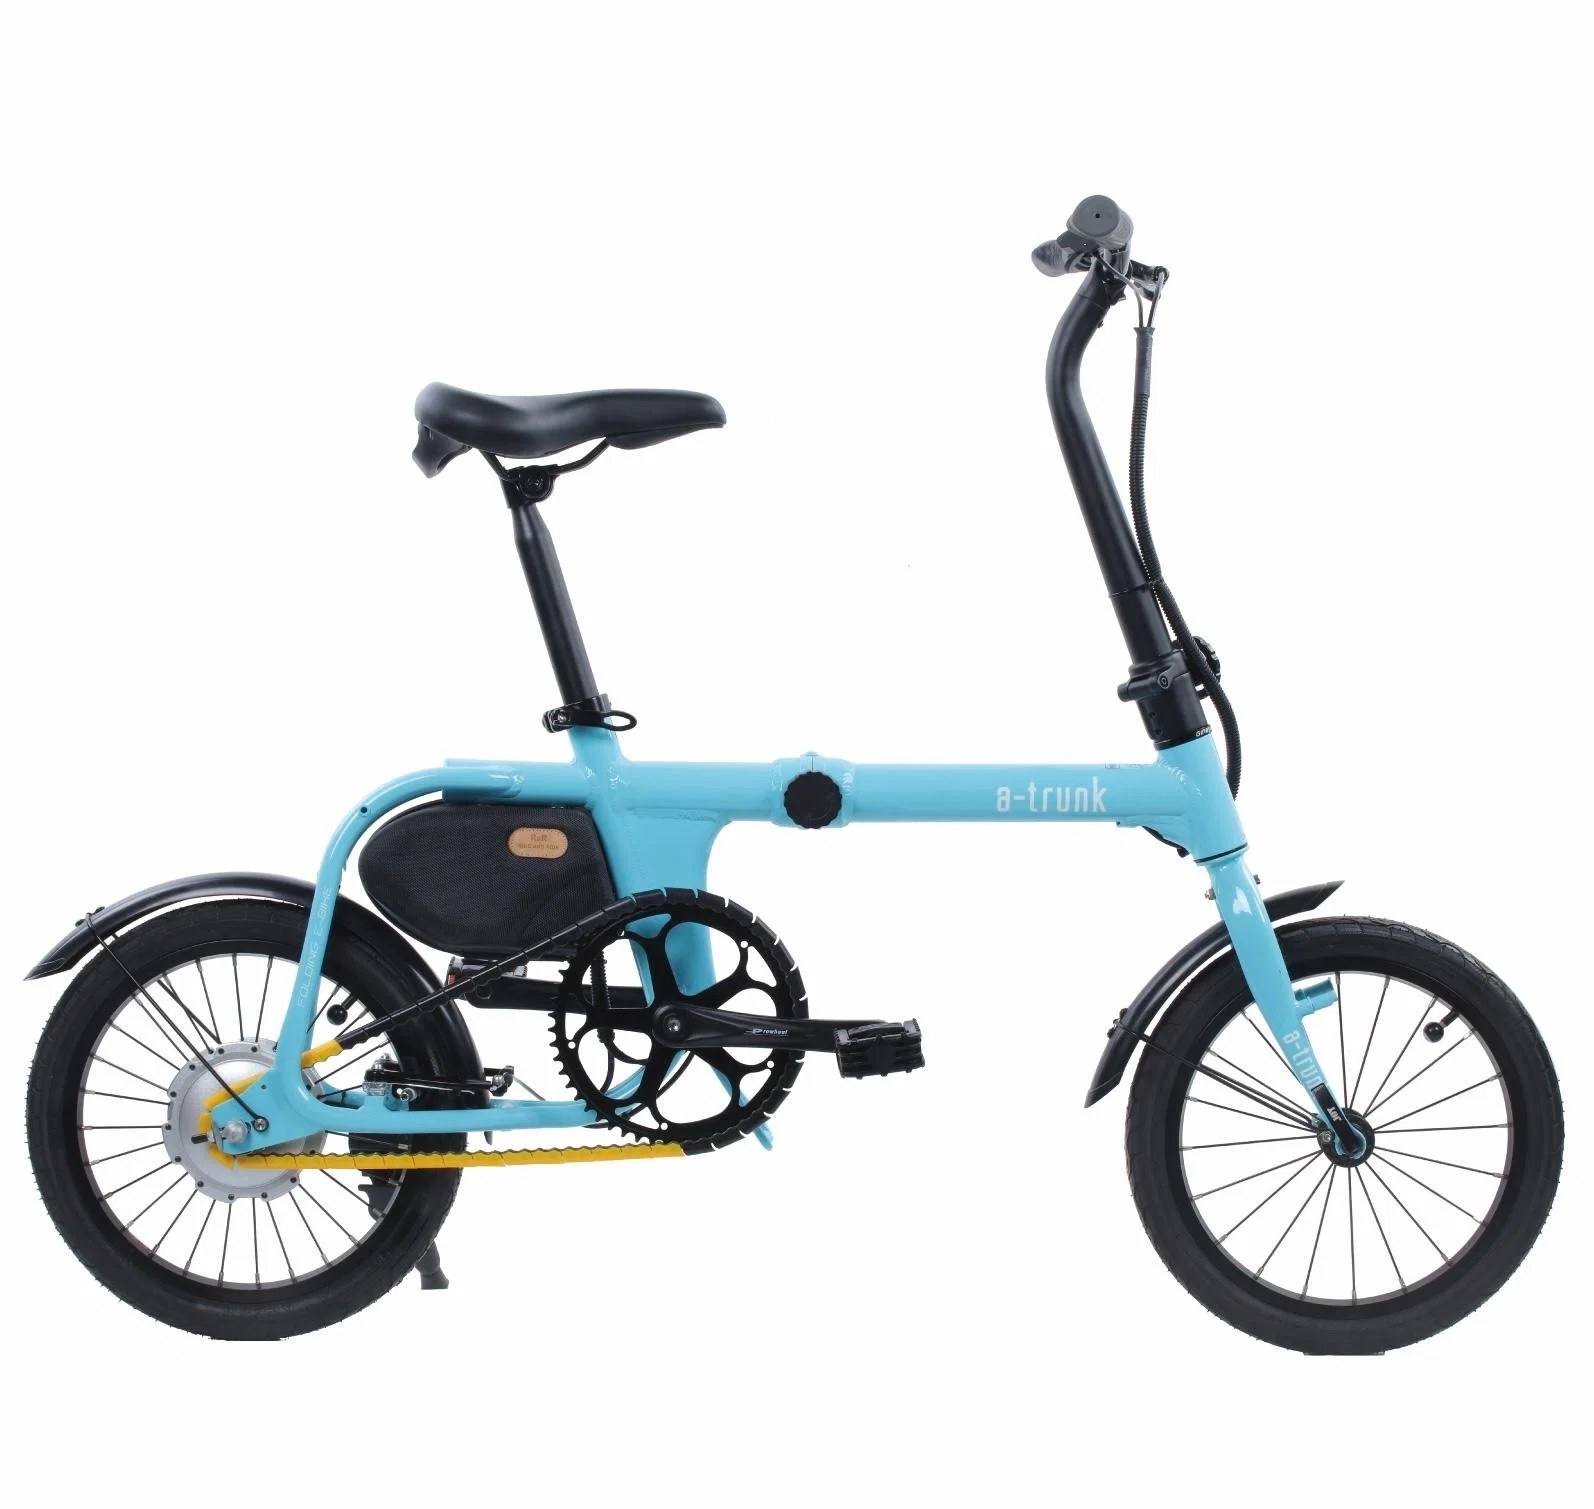 Nouveau design 20 pouces bon marché Ebike 250W City Bike gras Pneu Electric Mountain Bicycle bicicleta Electrica avec ce